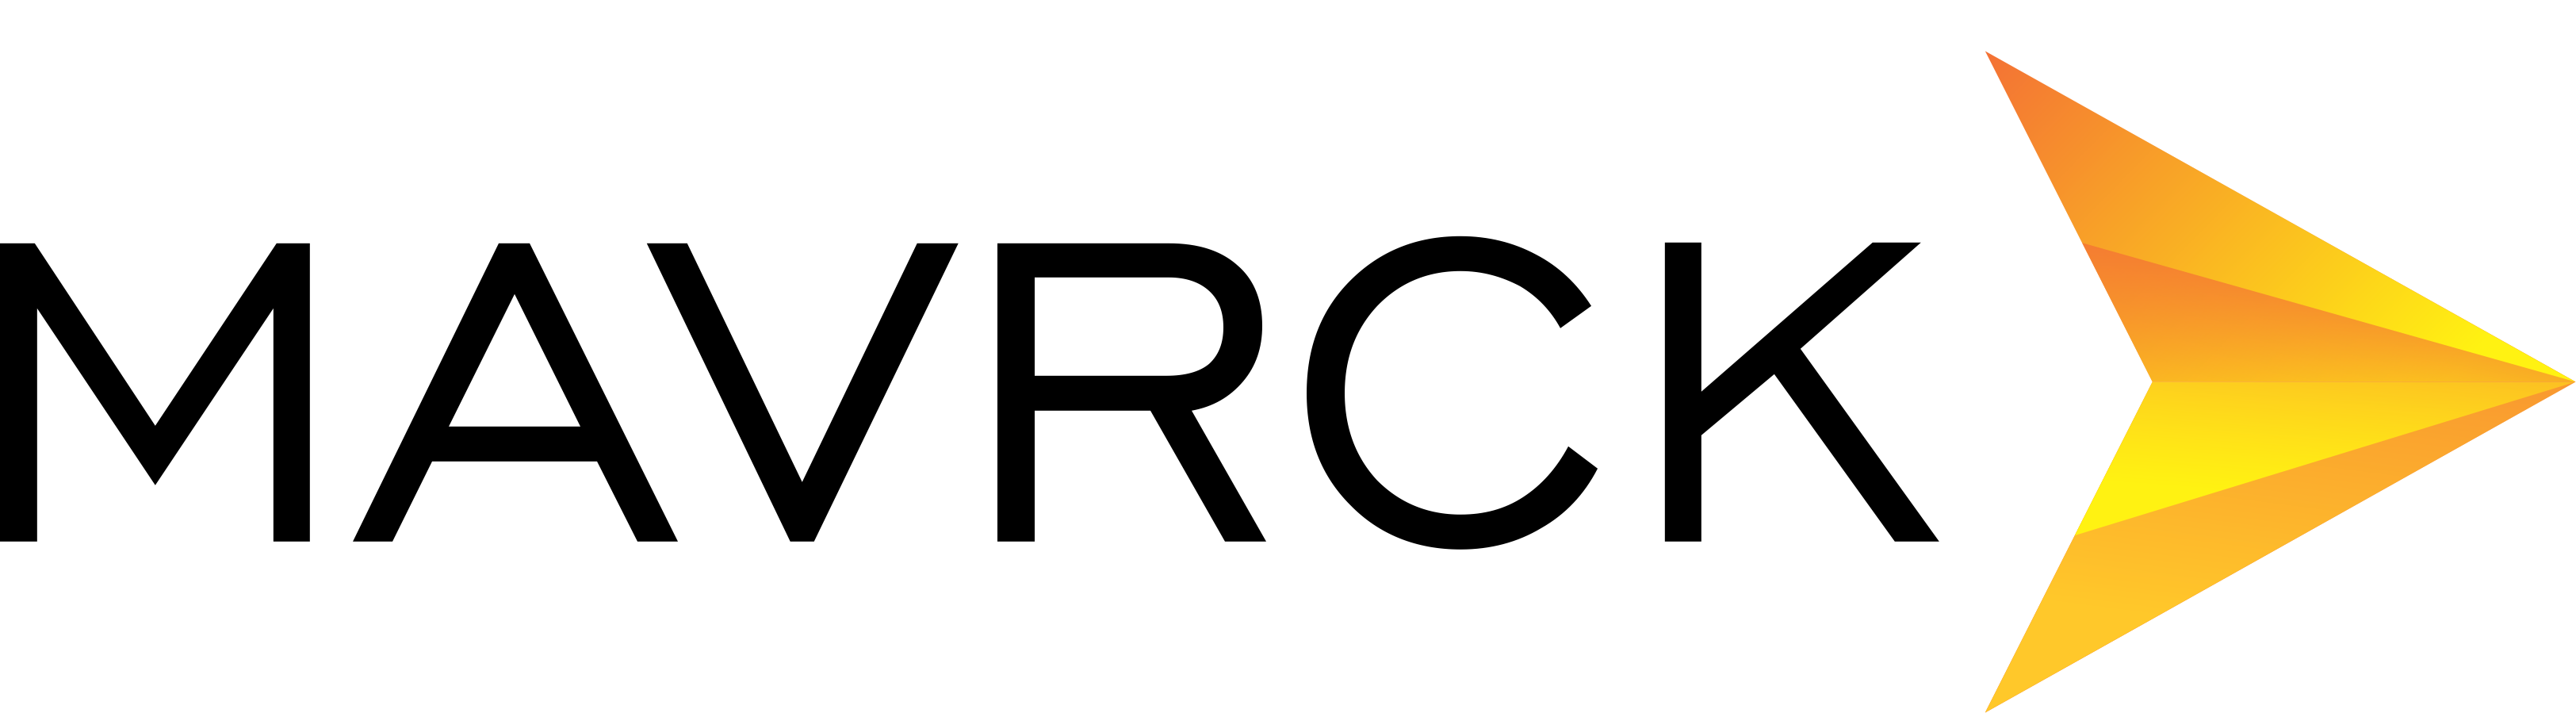 Mavrck_logo